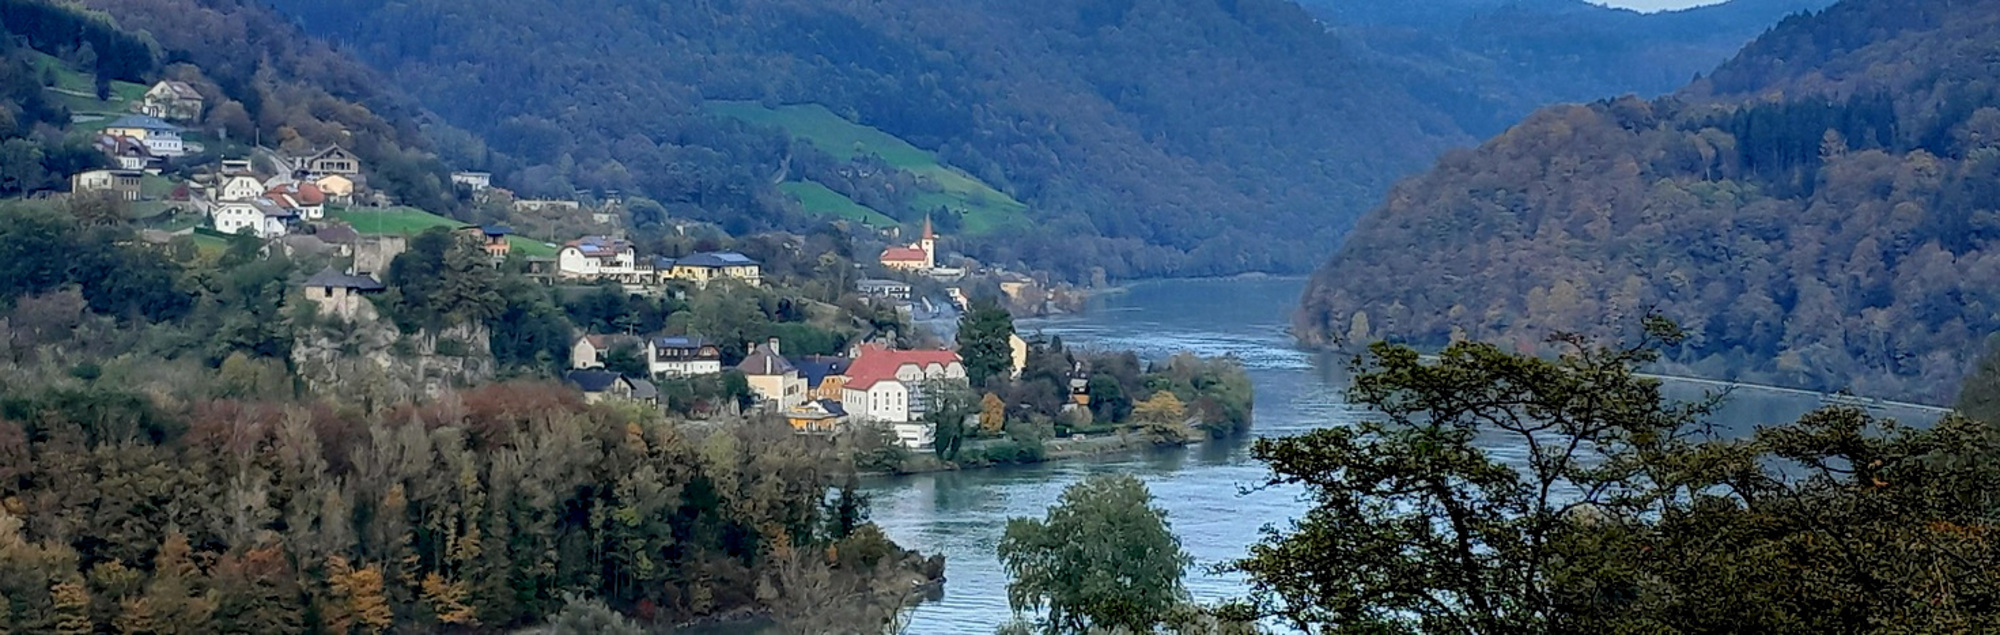 Pfarrgemeinde St. Nikola an der Donau